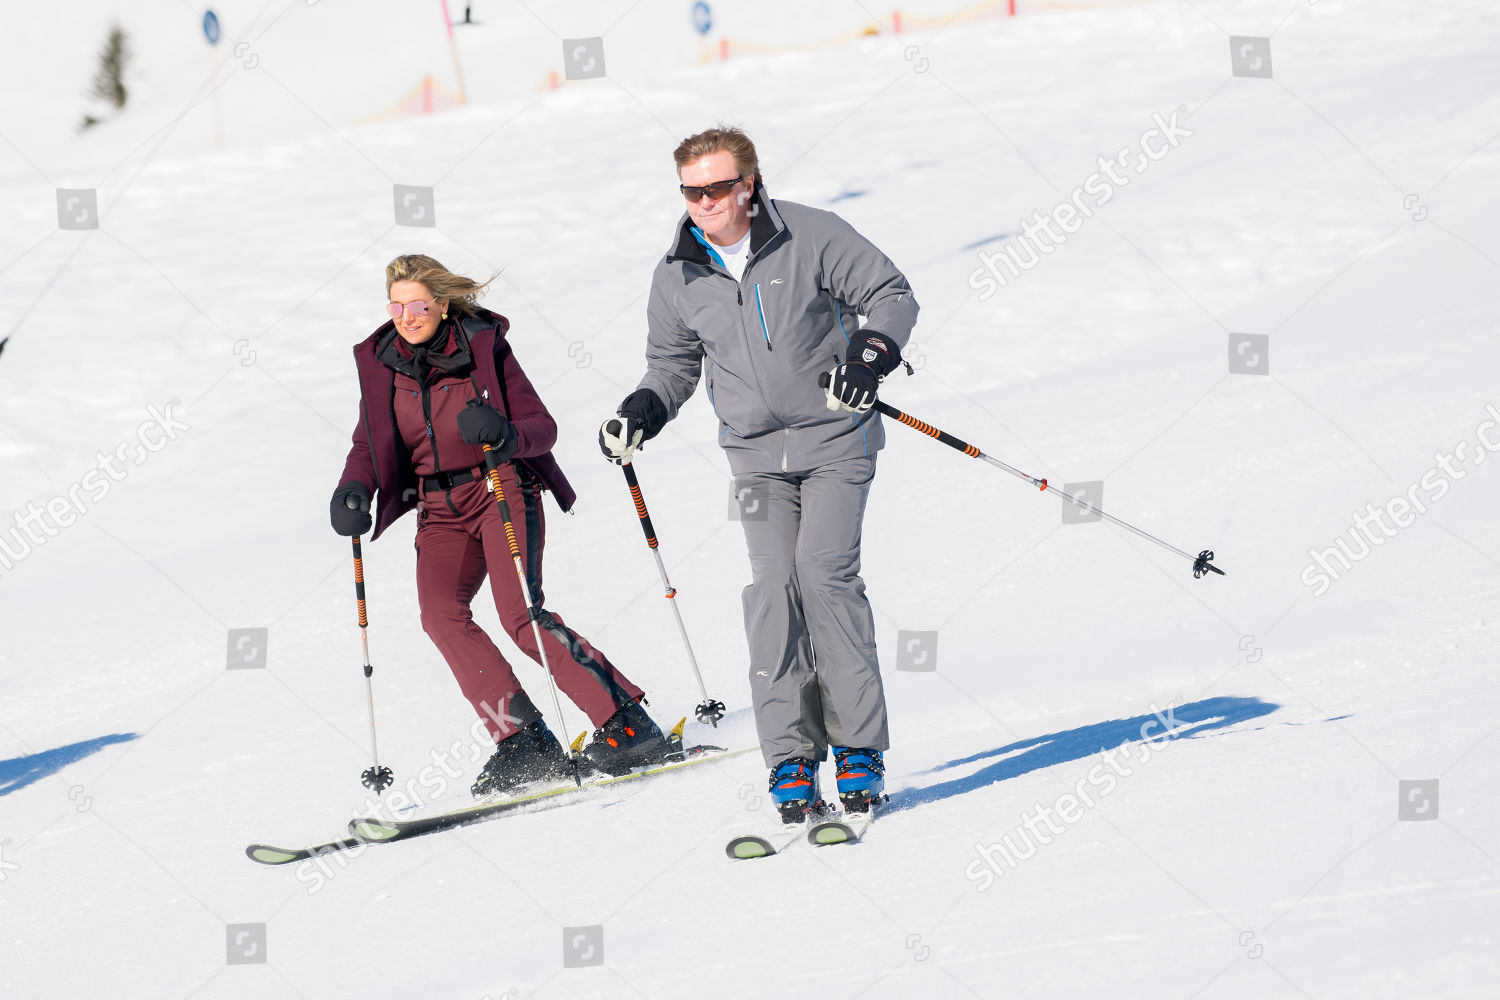 dutch-royals-winter-holiday-photocall-lech-austria-shutterstock-editorial-10118946ae.jpg